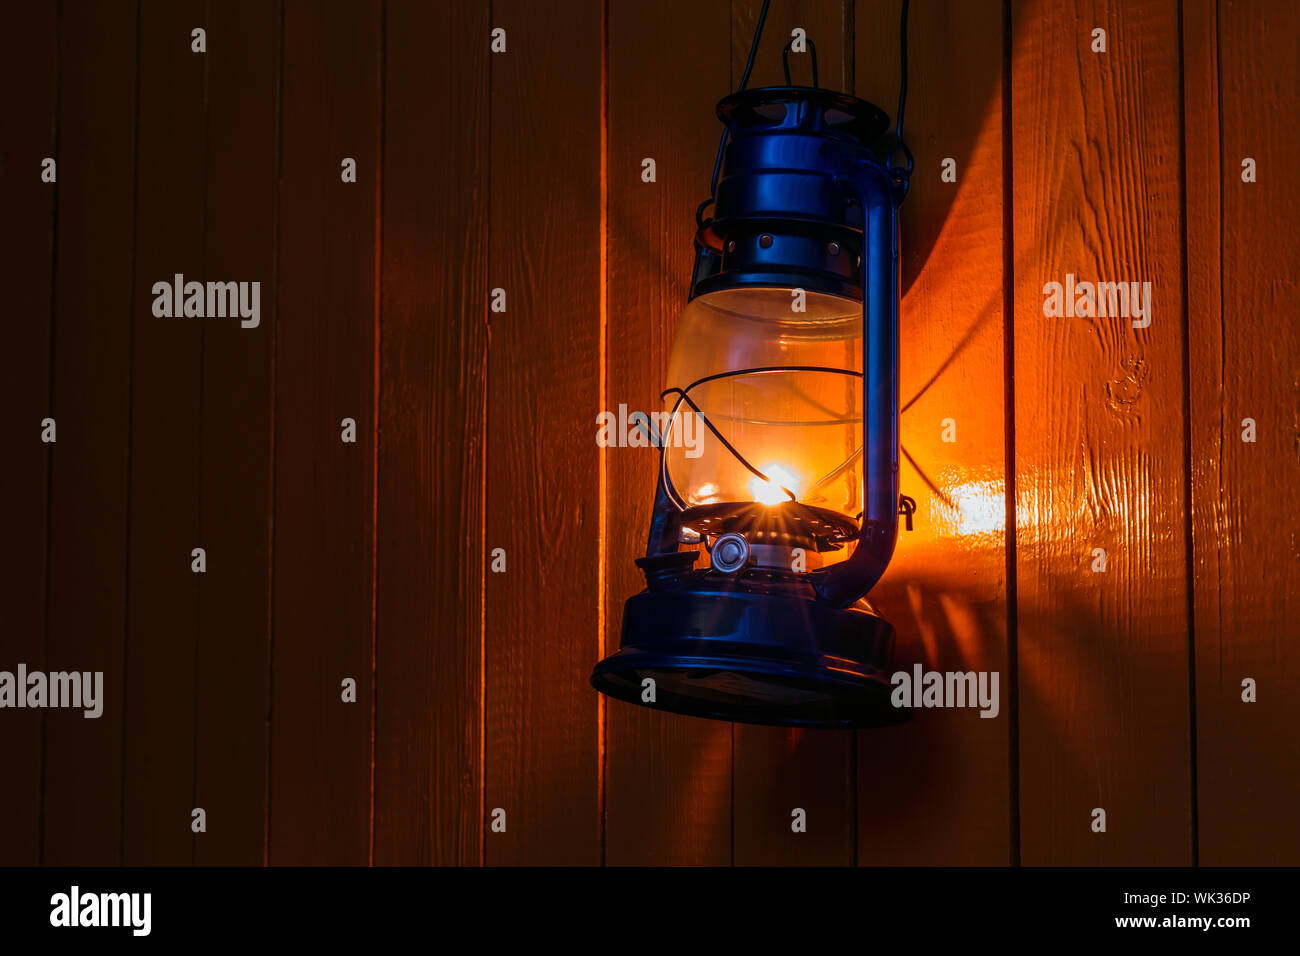 Wooden Lantern Hanging Electric Lamp Light for Table Diwali